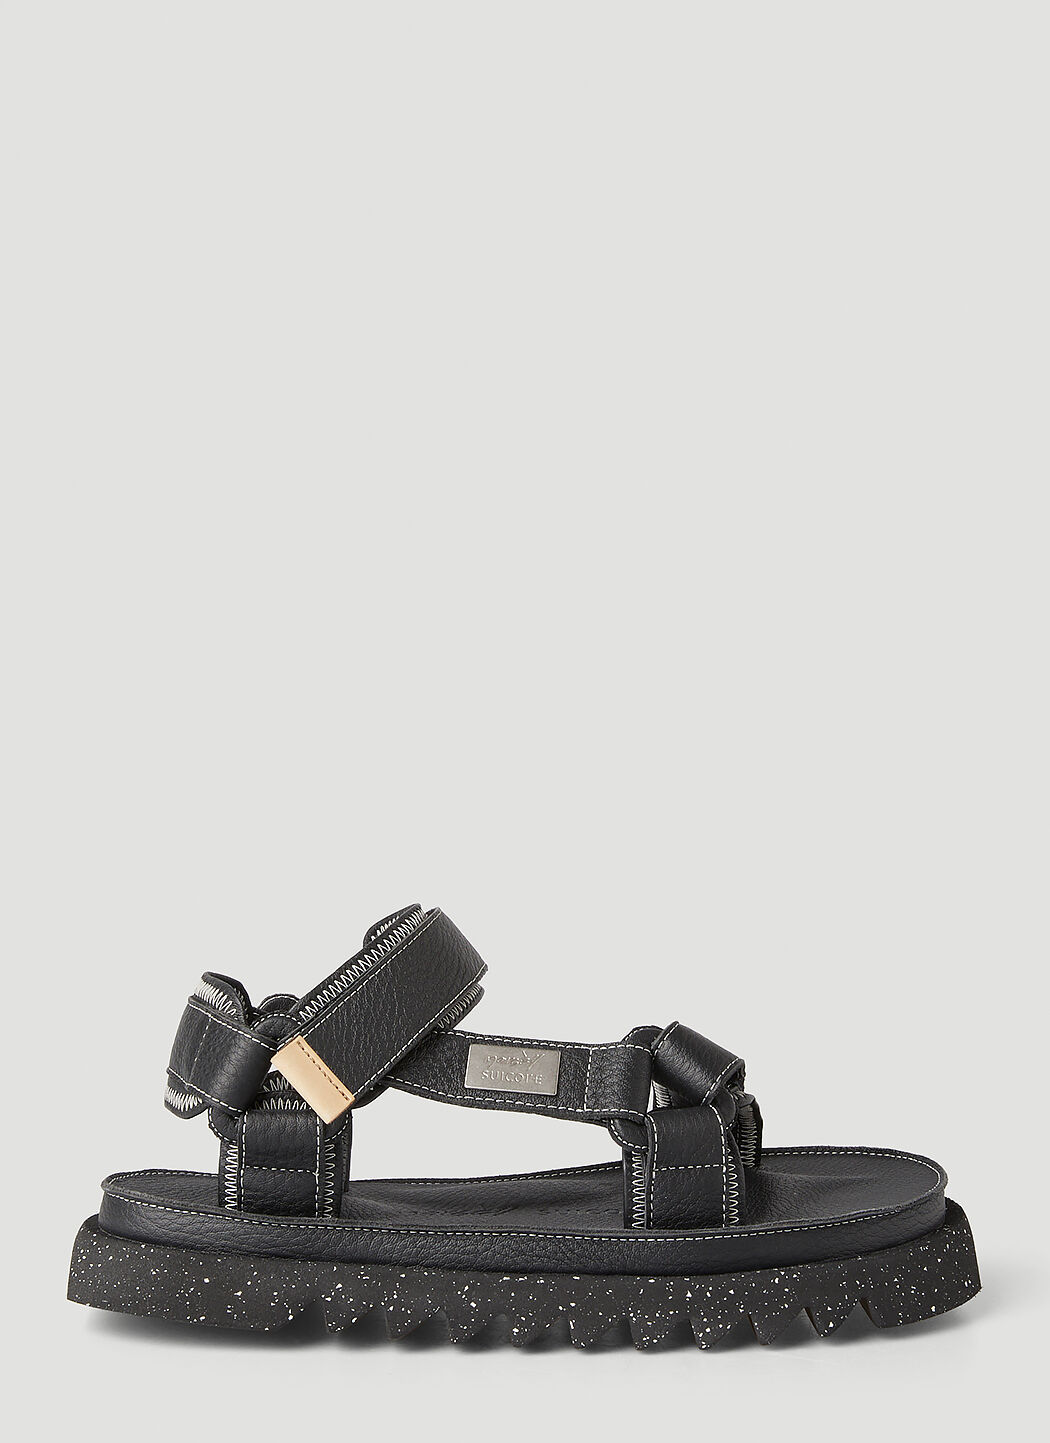 Marsèll x Suicoke Depa 01 Sandals in Black | LN-CC®